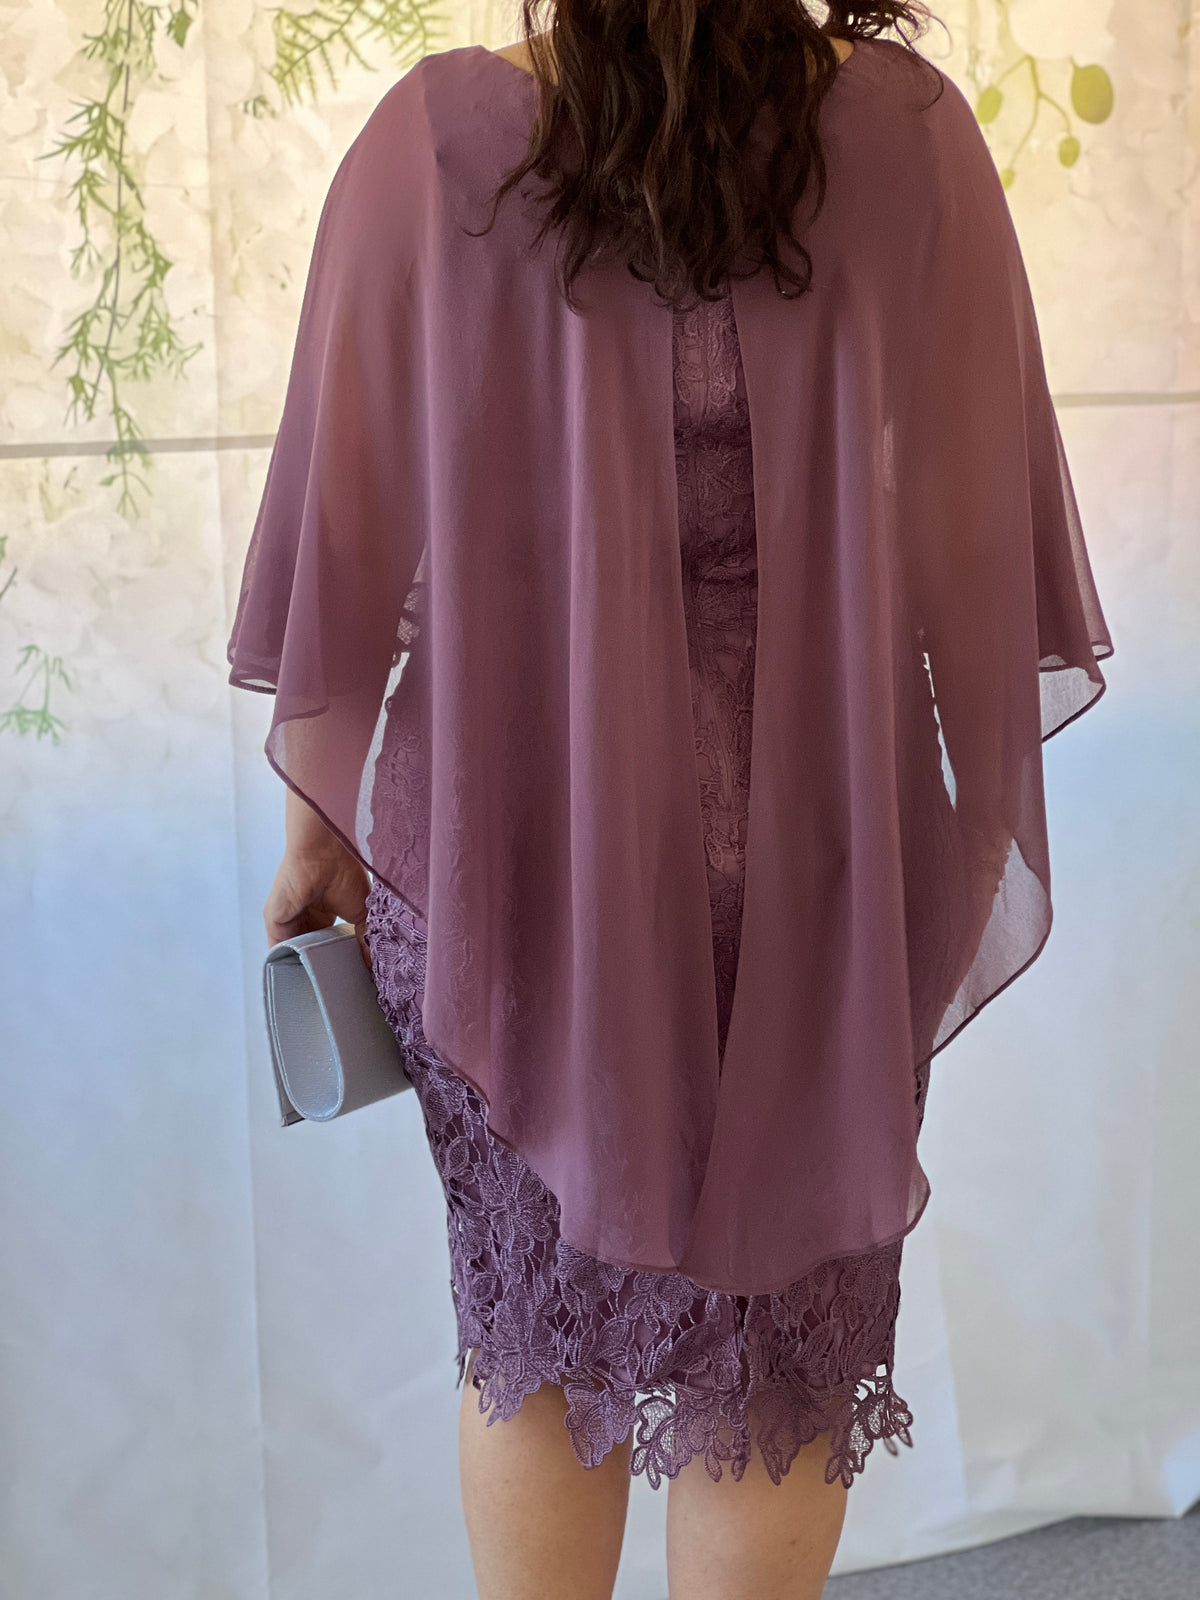 Tiama Lavender Lace Dress